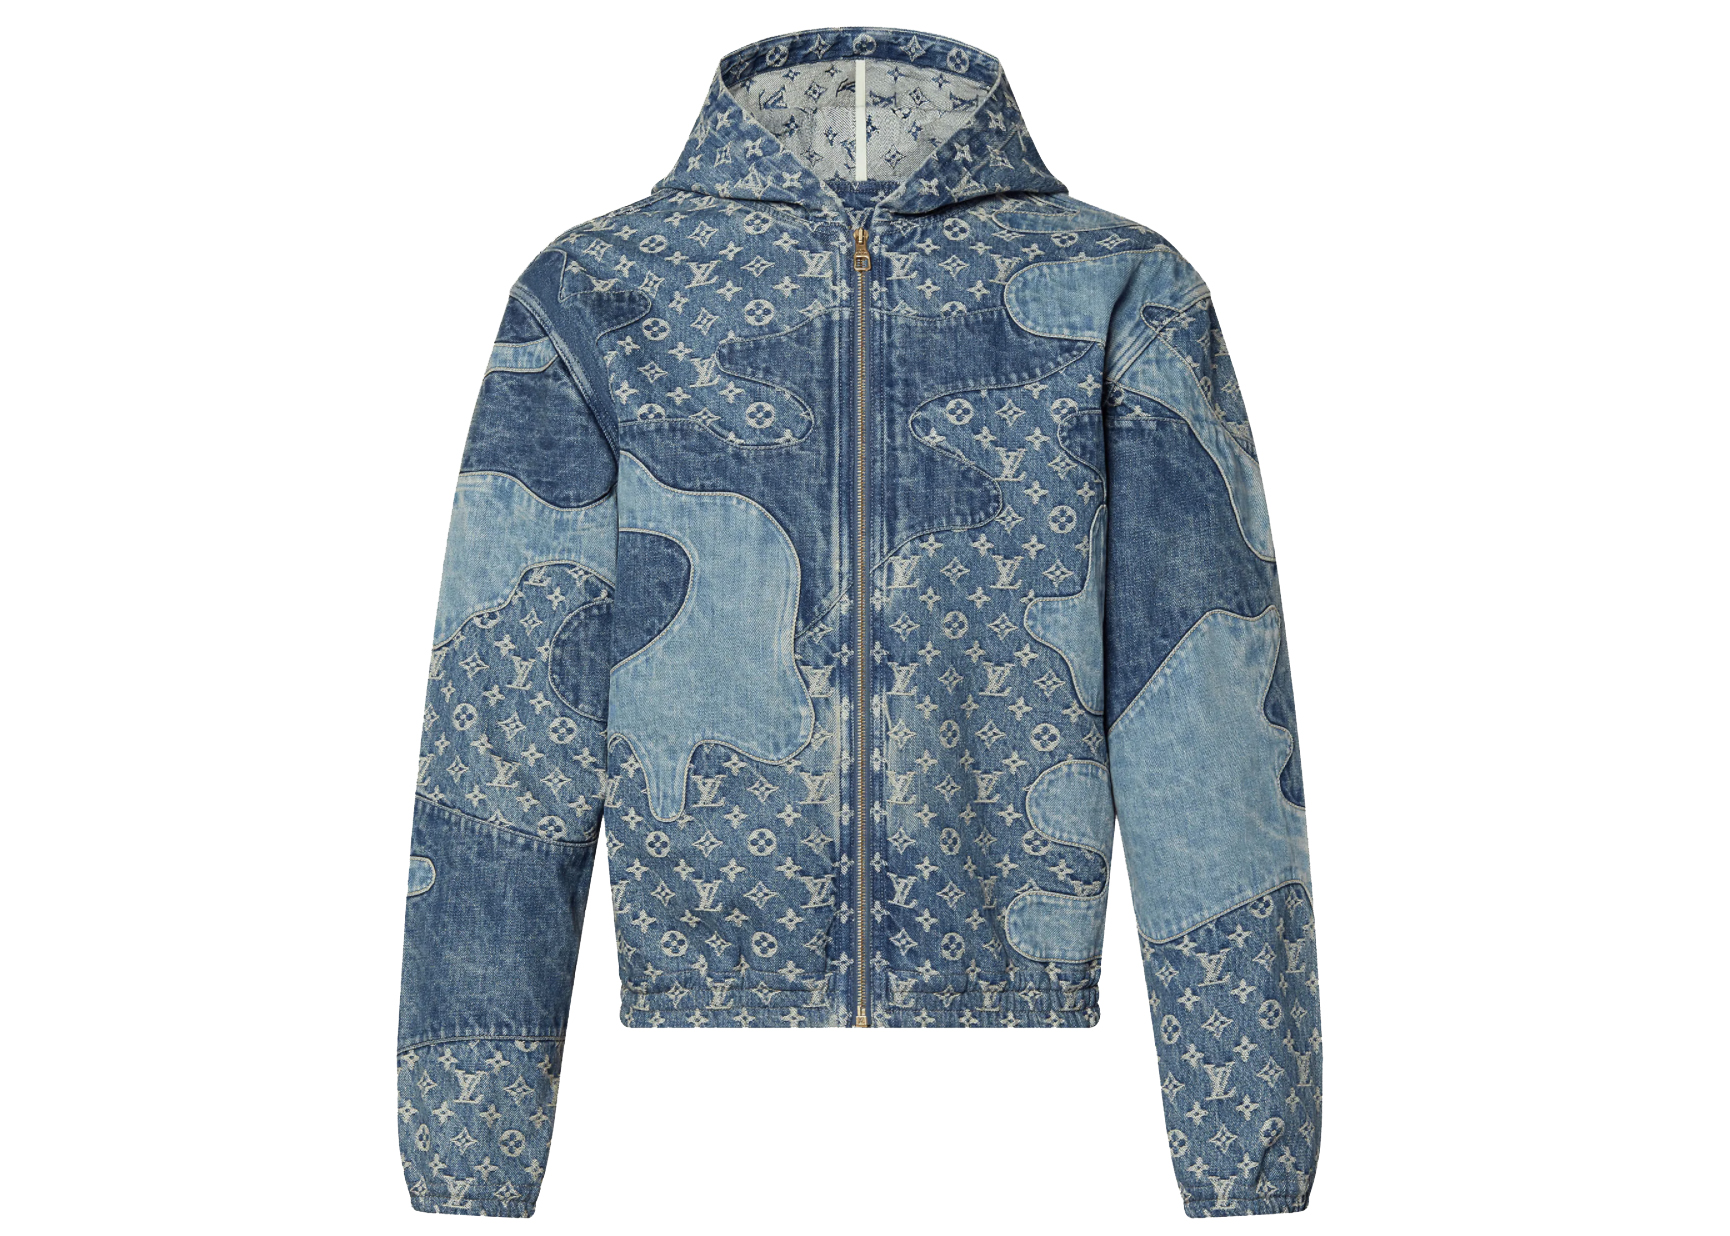 Louis Vuitton  Jackets  Coats  Louis Vuitton X Nba Zipthrough  Hoodiedenim Blue  Poshmark